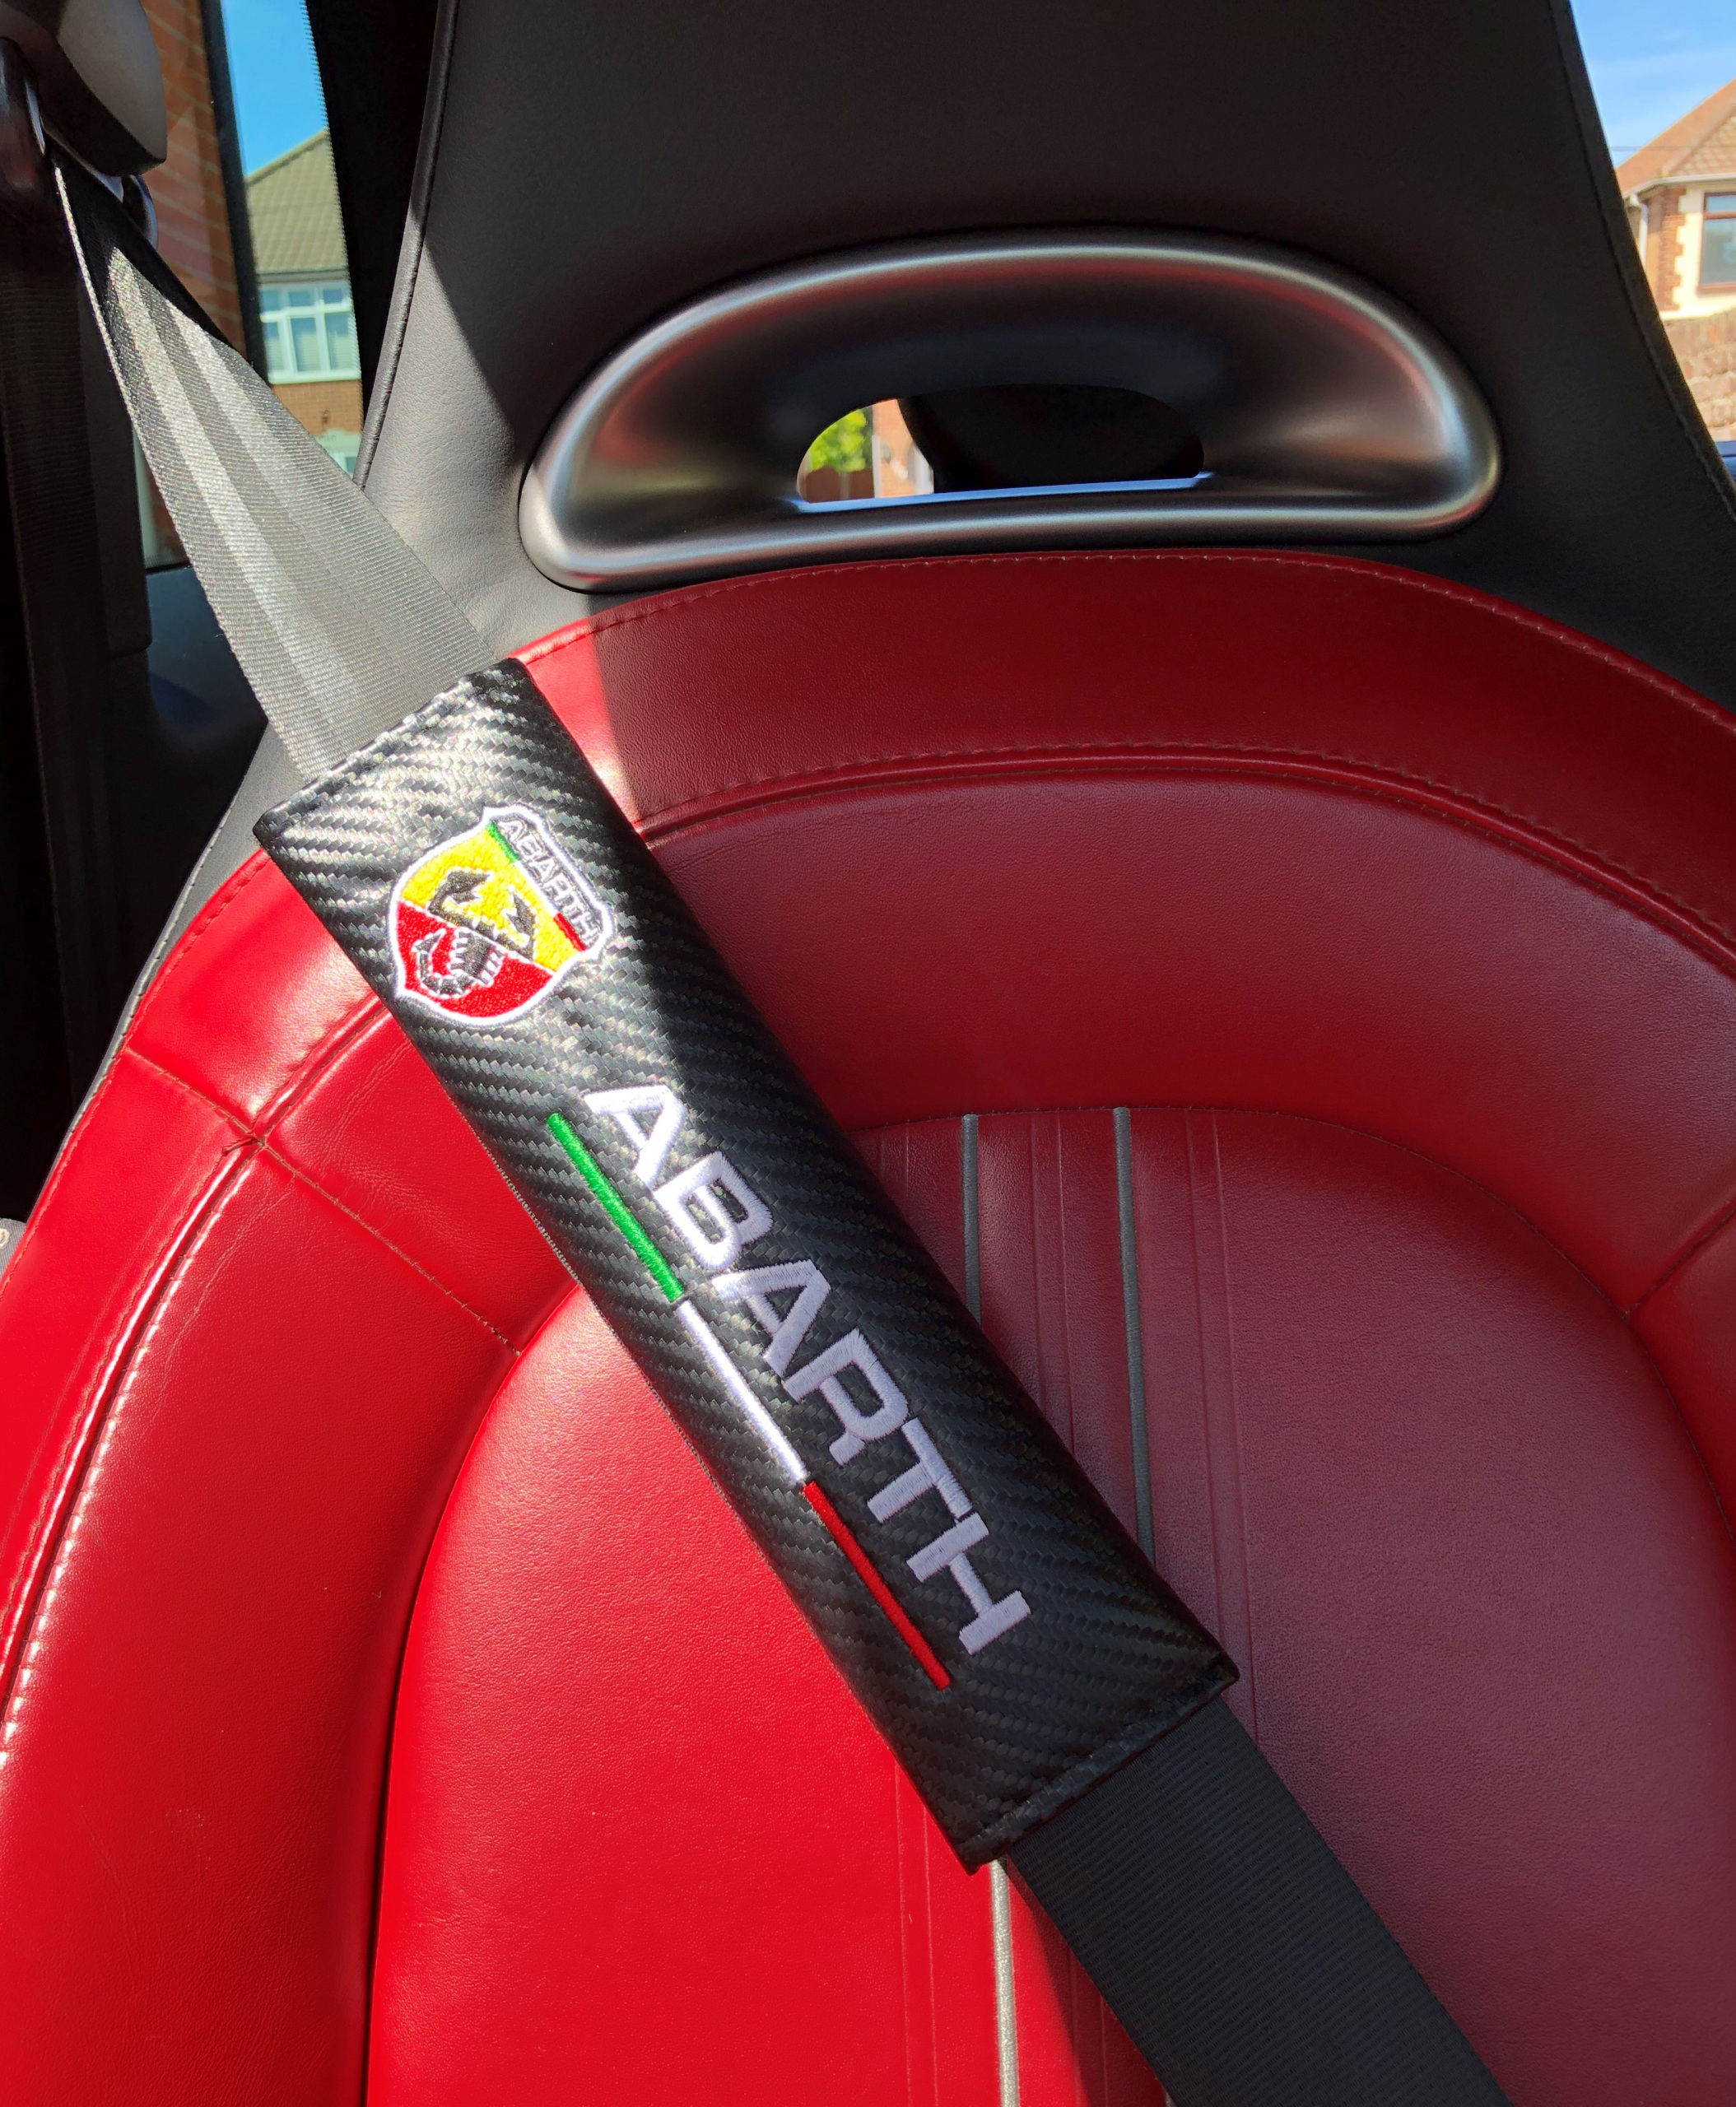 Vestian 2X Carbon Fiber Sport Abarth Seat Belt Cover Shoulder Pad Cushion for Abarth Racing 